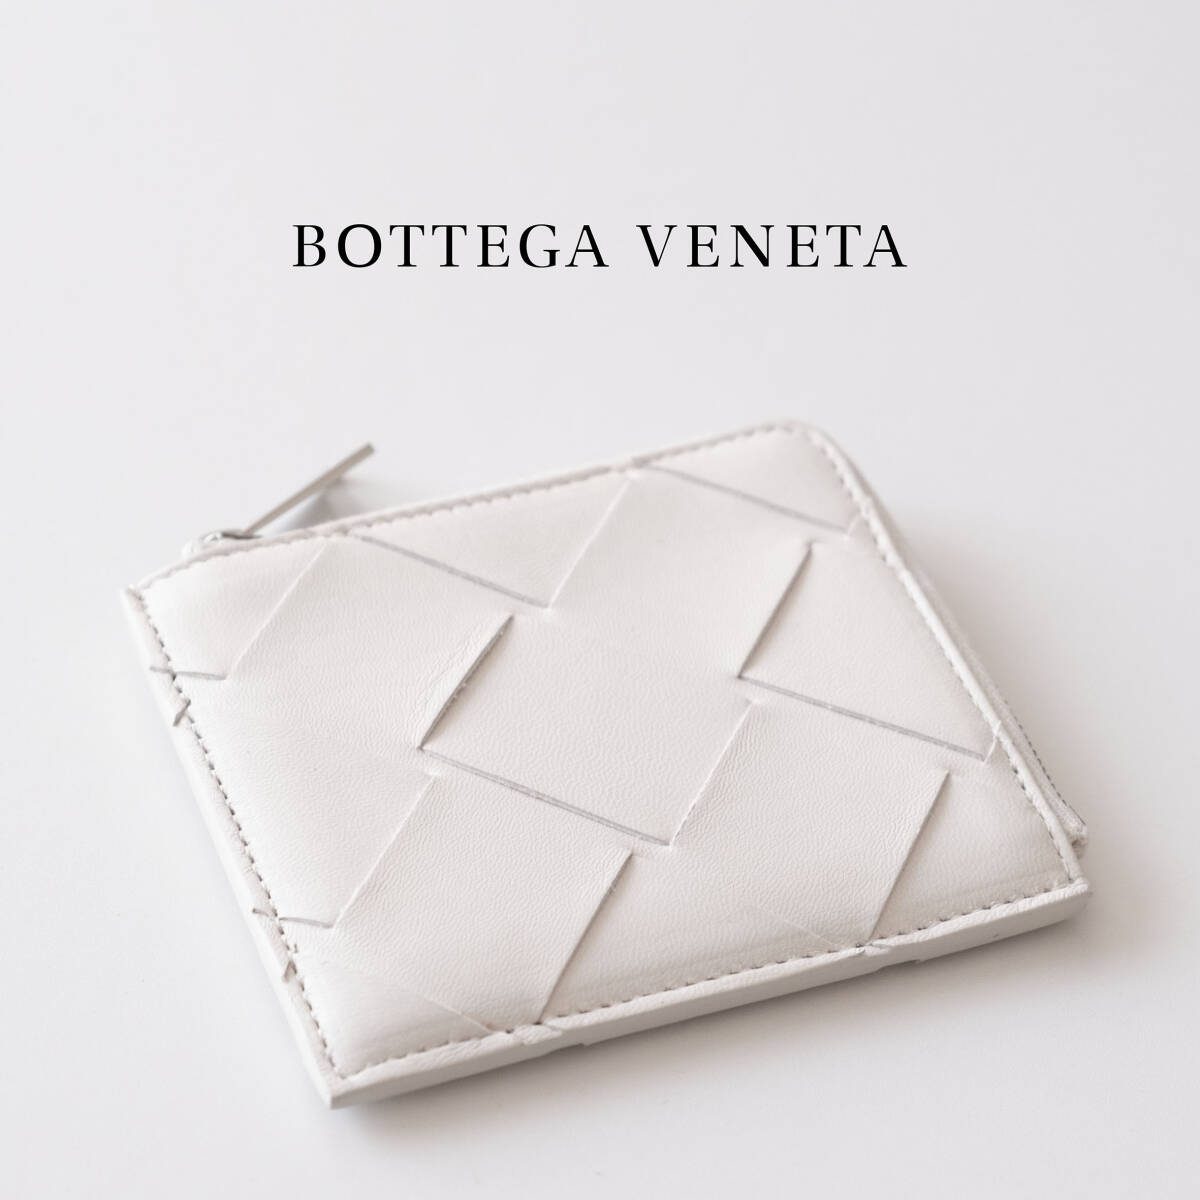 ■BOTTEGA VENETA ボッテガヴェネタ 7.8万円 新品 未使用 イントレチャート 財布 カーフレザー 1点限り■3992_画像1